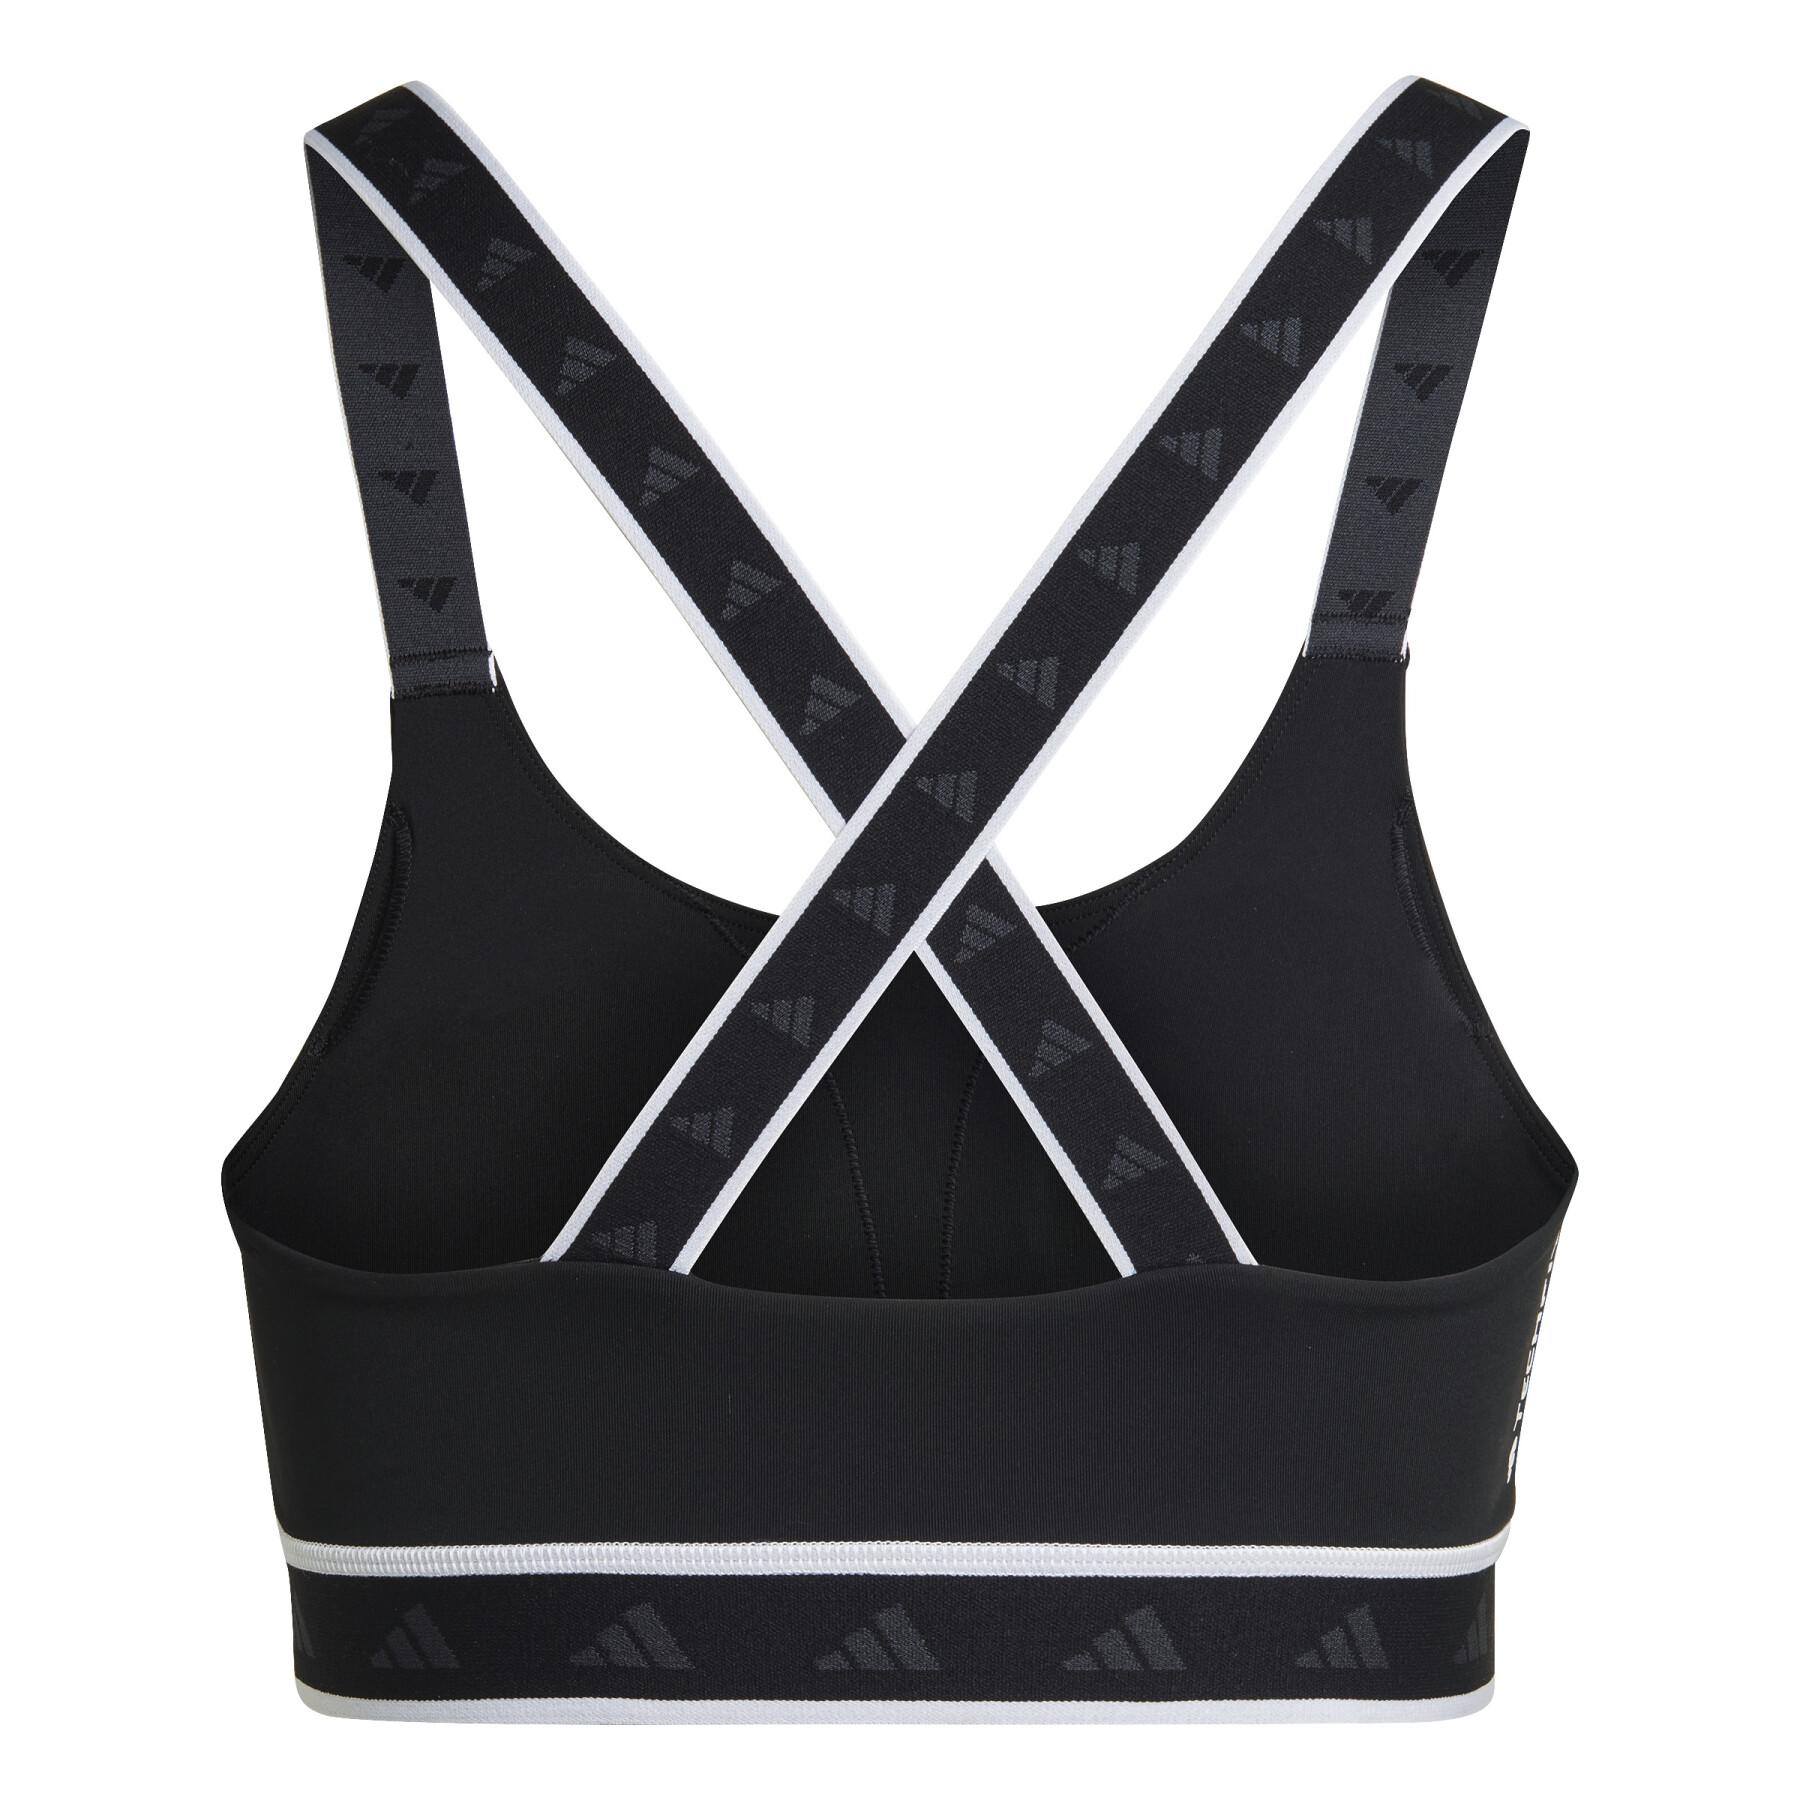 Medium support bra for women adidas Powerimpact